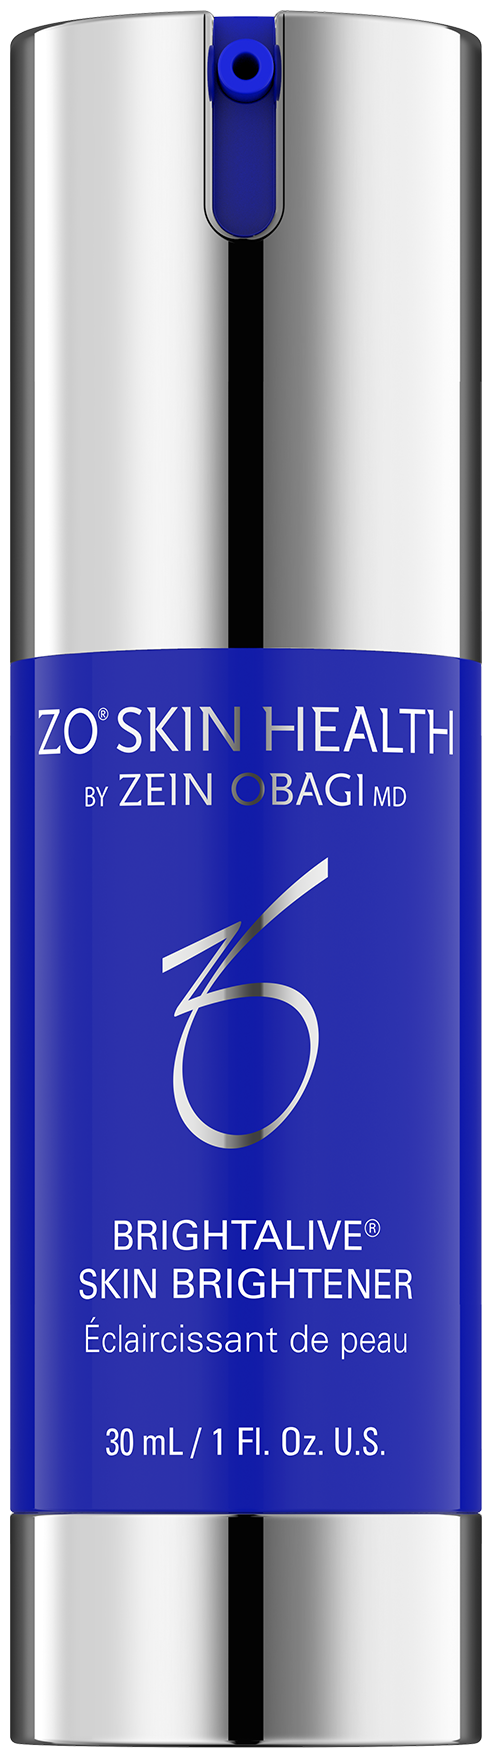 ZO Skin Health Brightalive Skin Brightener крем для выравнивания тона кожи лица, 30 мл